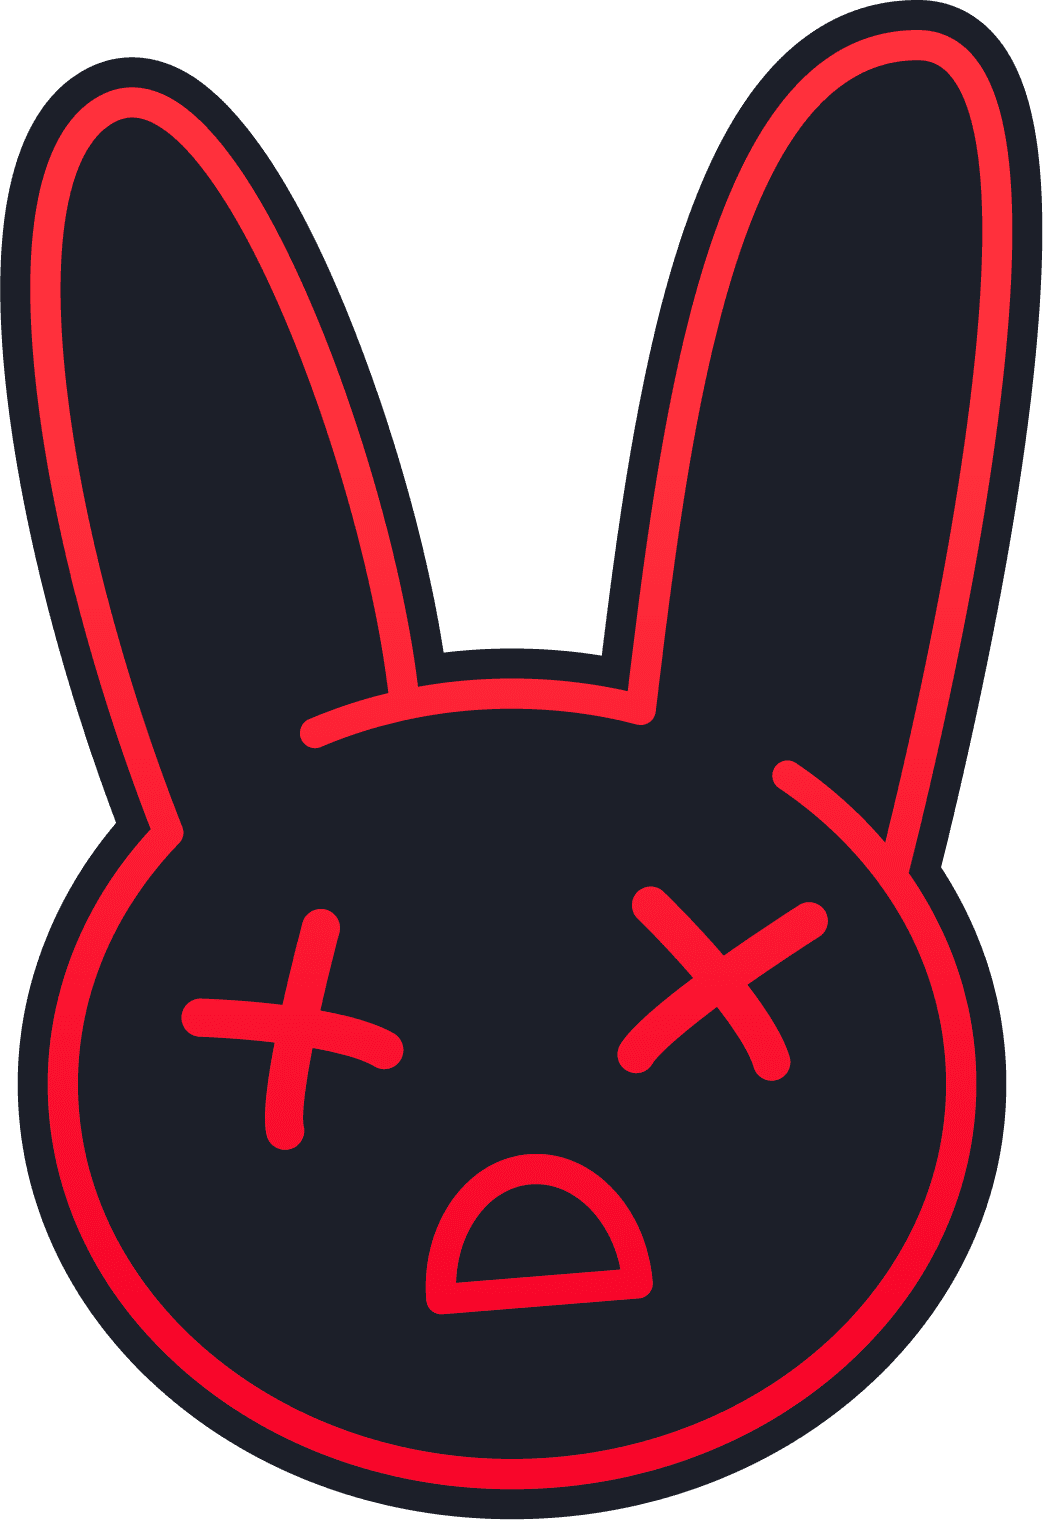 Bad bunny logo